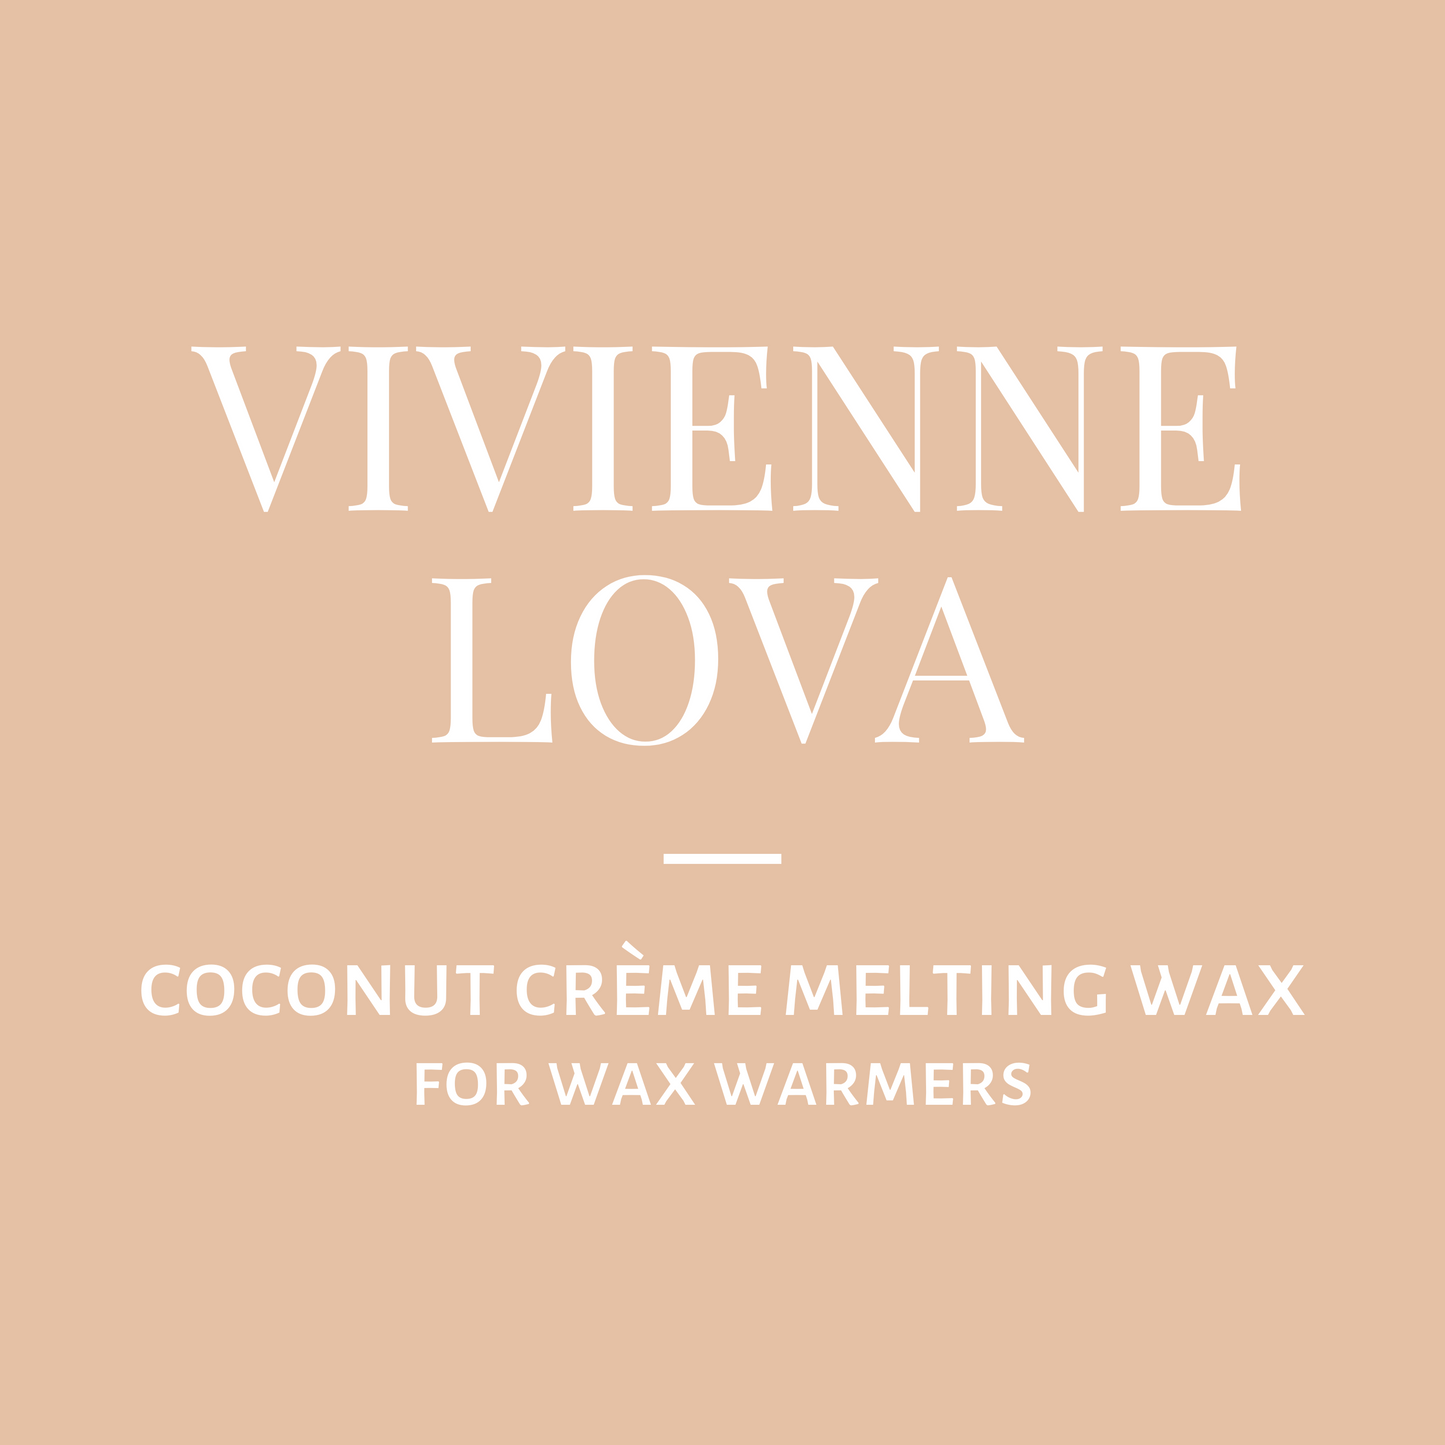 Melting Wax-Vivienne Lova